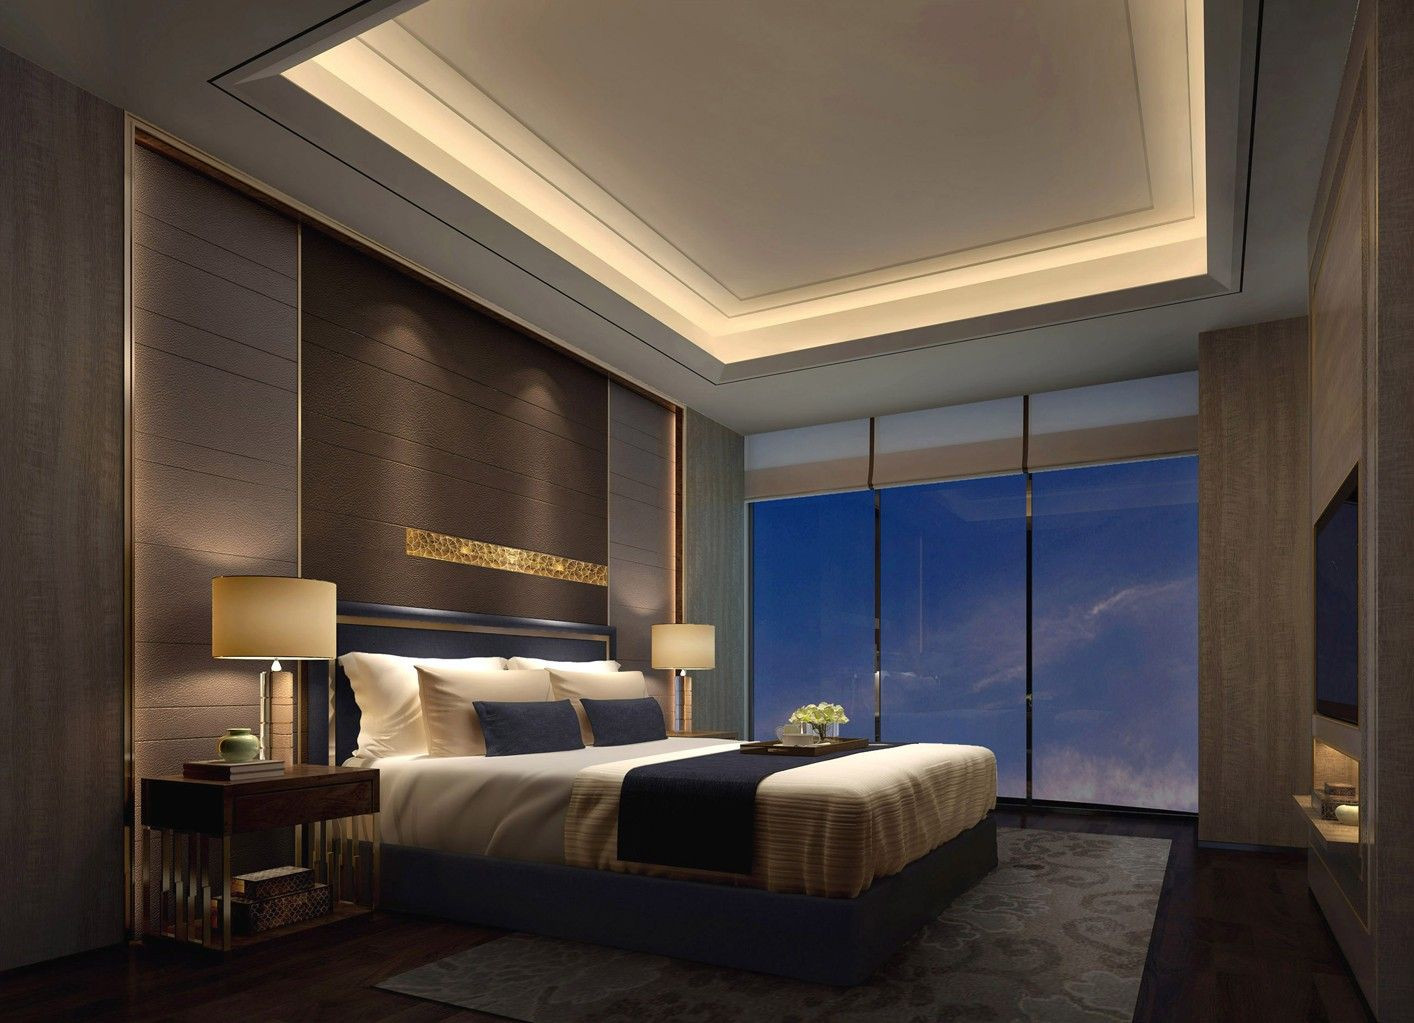 Bedroom Ceiling Lights Ideas
 Recessed master bedroom ceiling with hidden lights